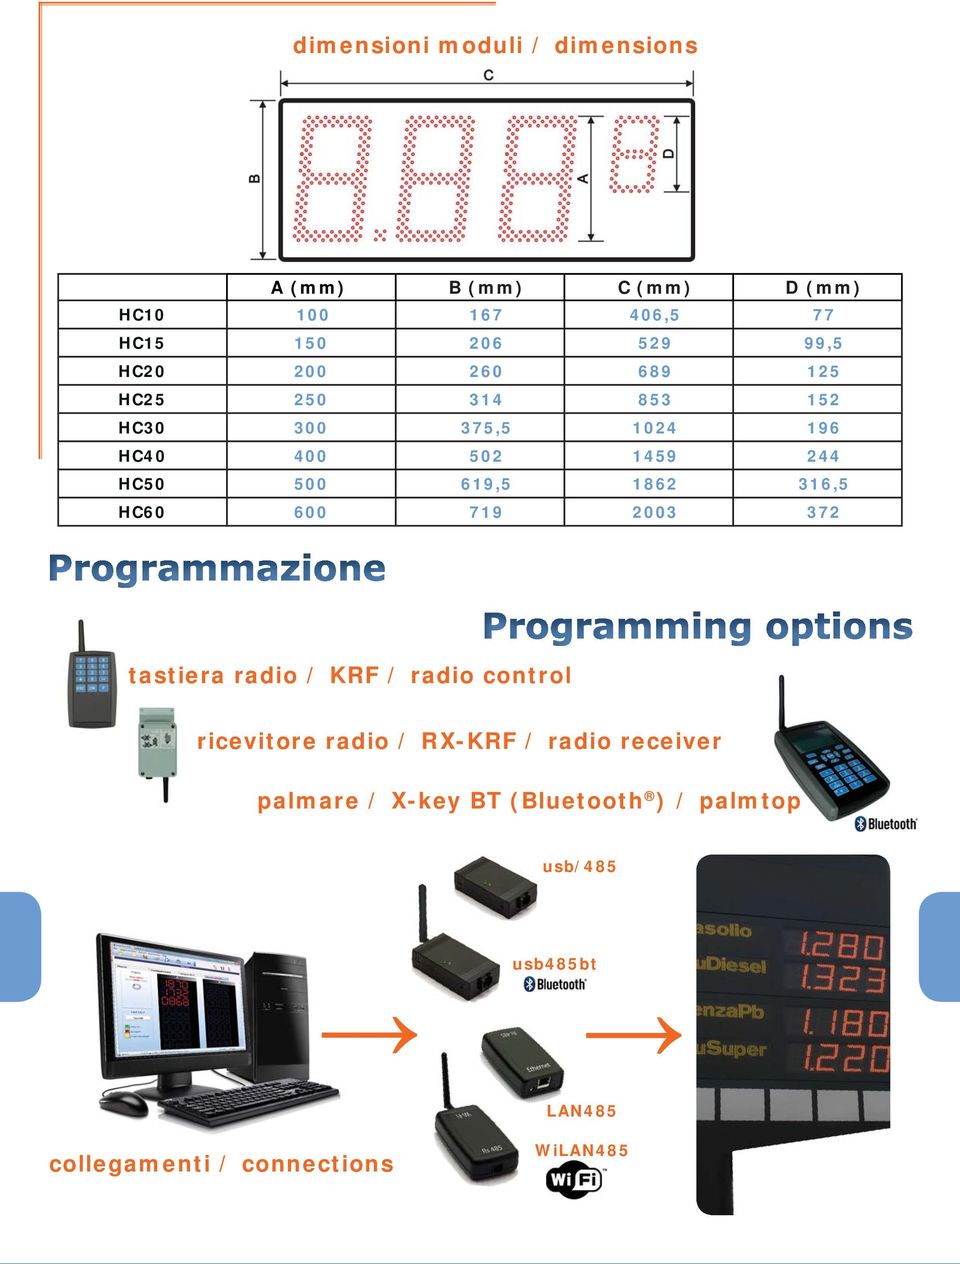 1862 316,5 HC60 600 719 2003 372 tastiera radio / KRF / radio control ricevitore radio / RX-KRF / radio